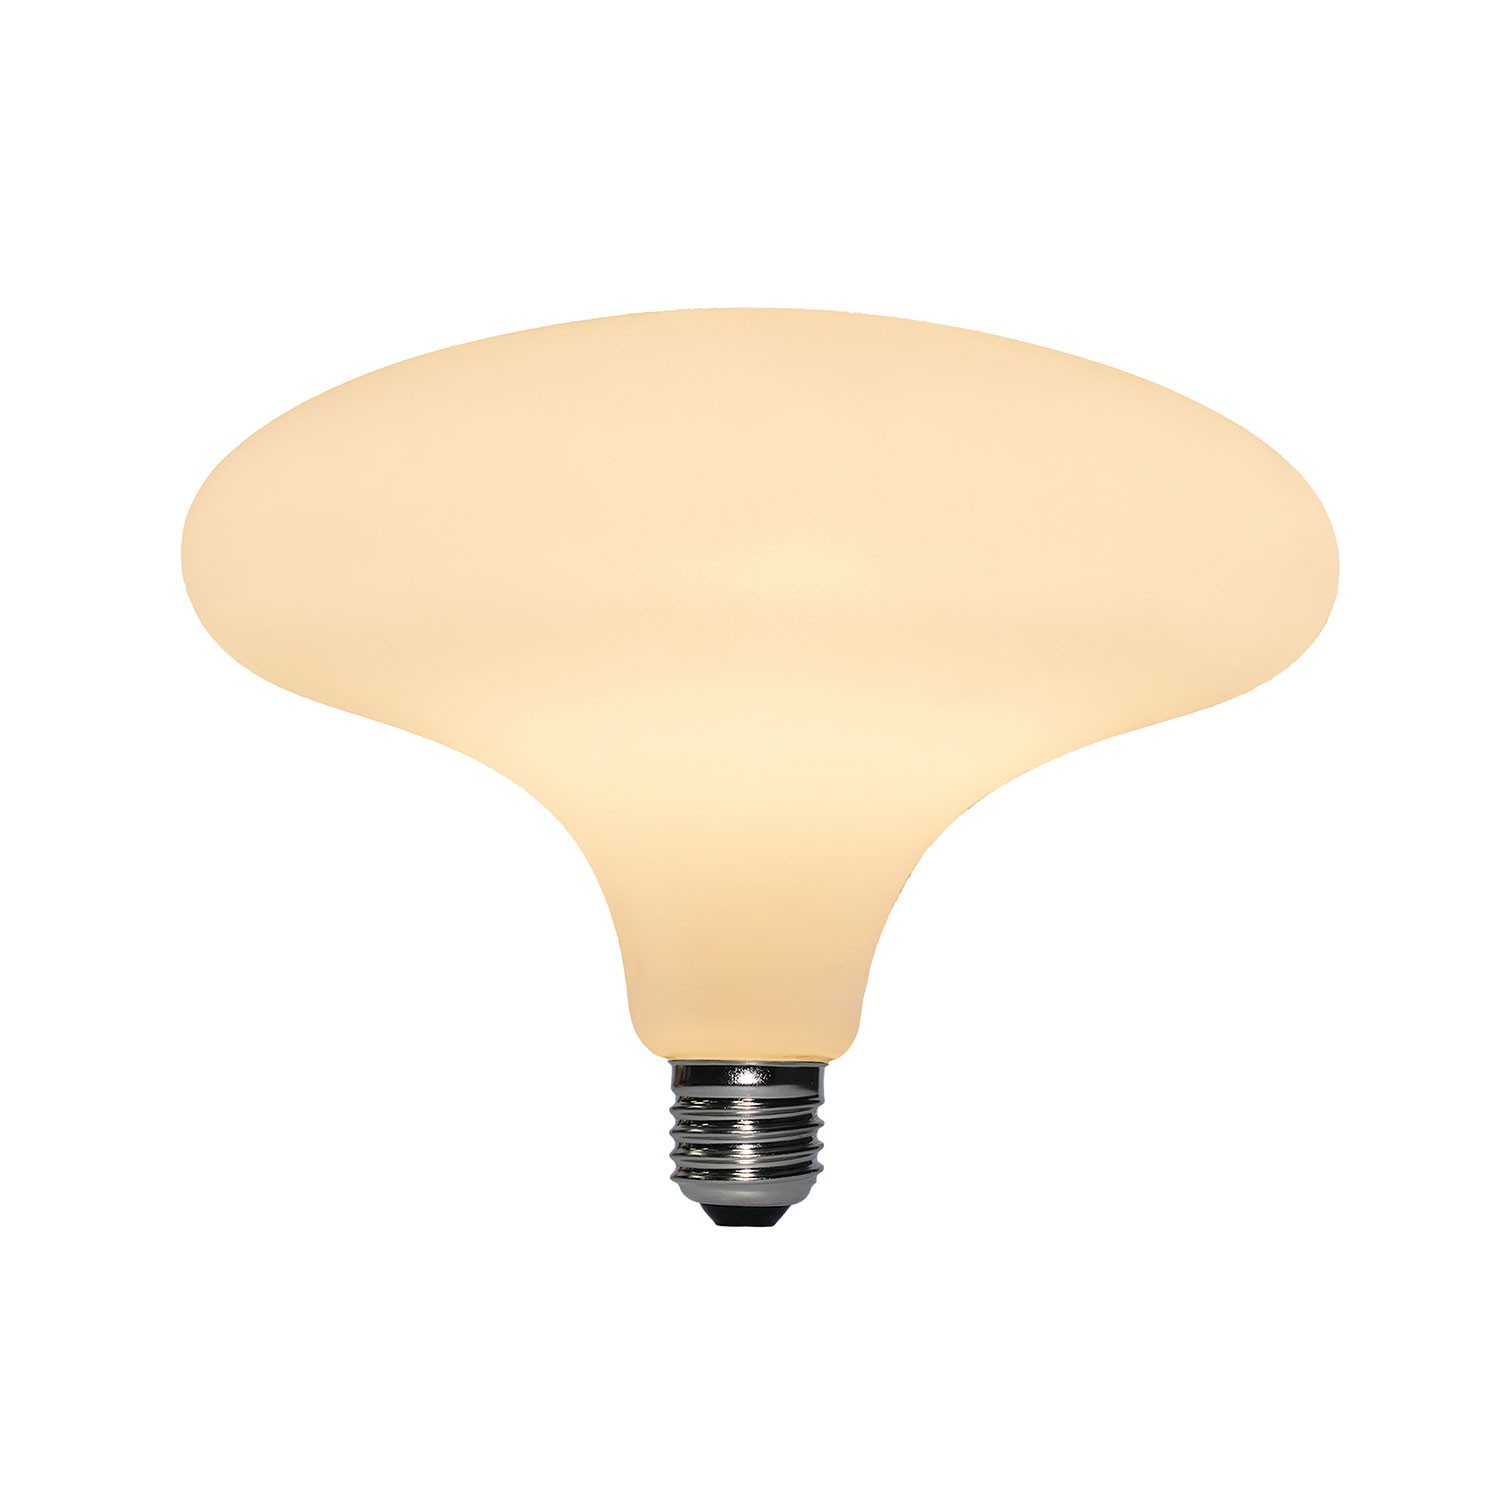 LED Porcelain Light Bulb Idra 6W 540Lm E27 2700K Dimmable